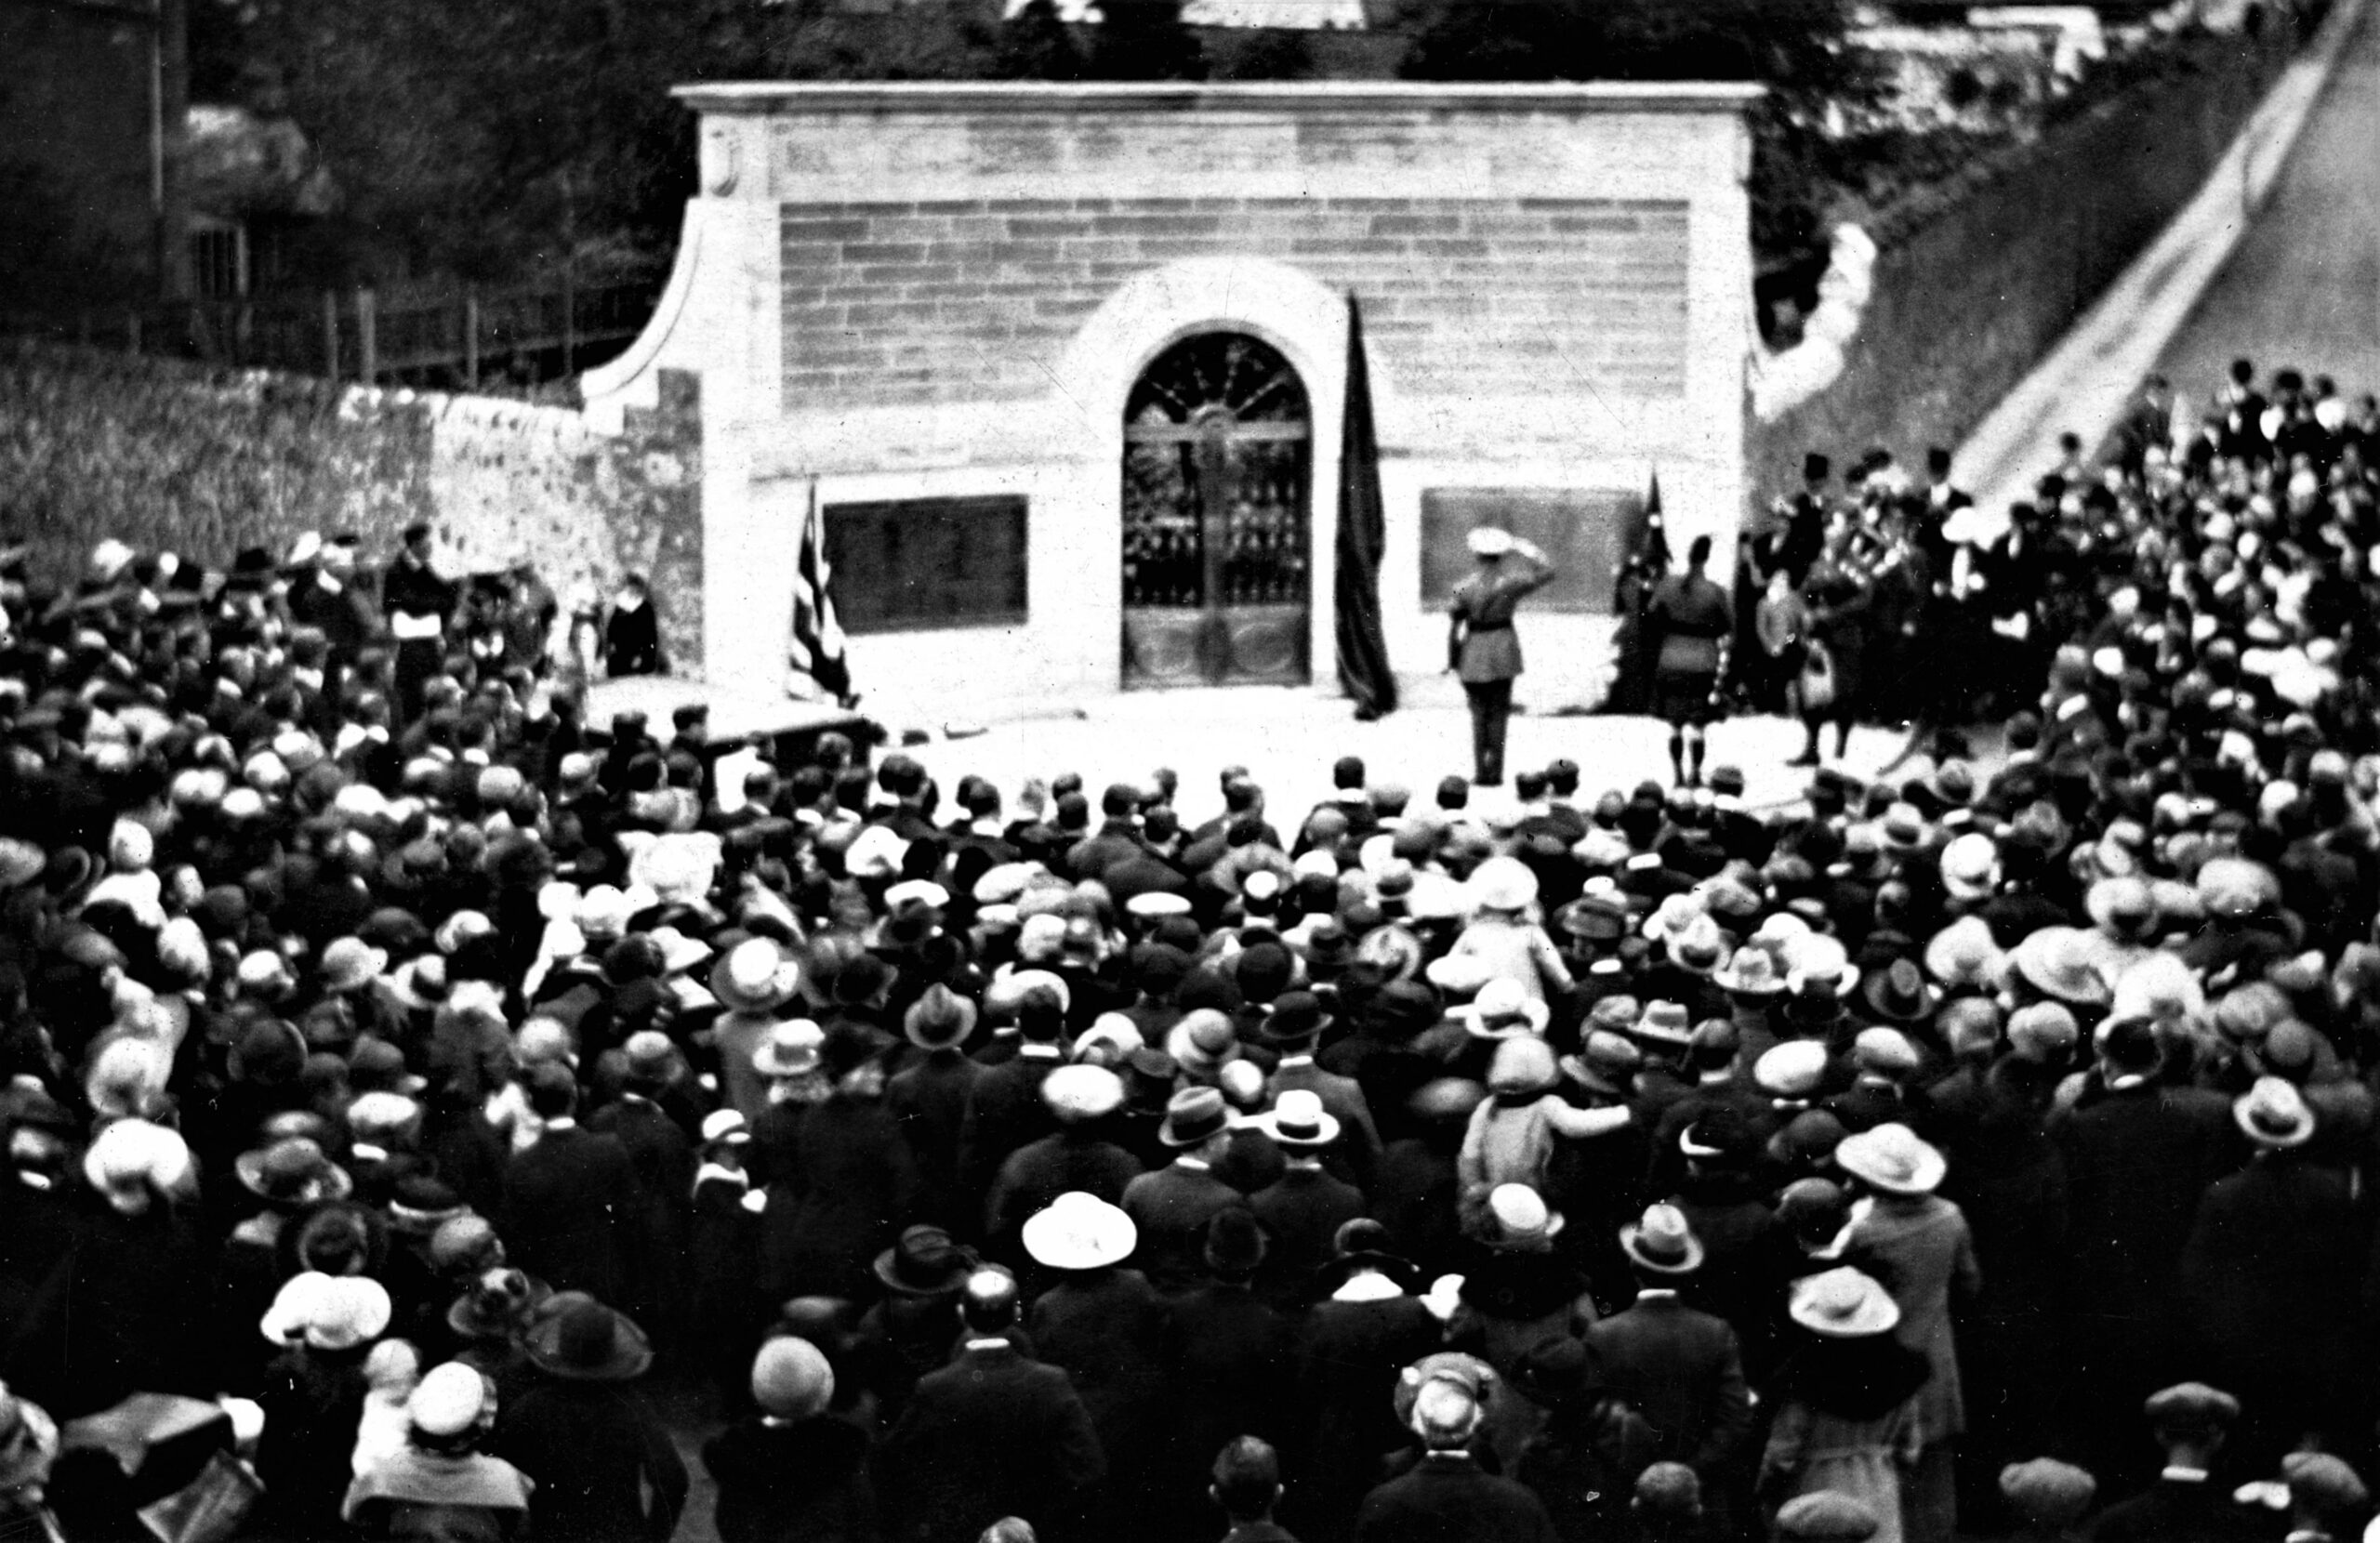 Tayport Heritage Trail - Board 9 - Dedication ceremony at memorial 1921